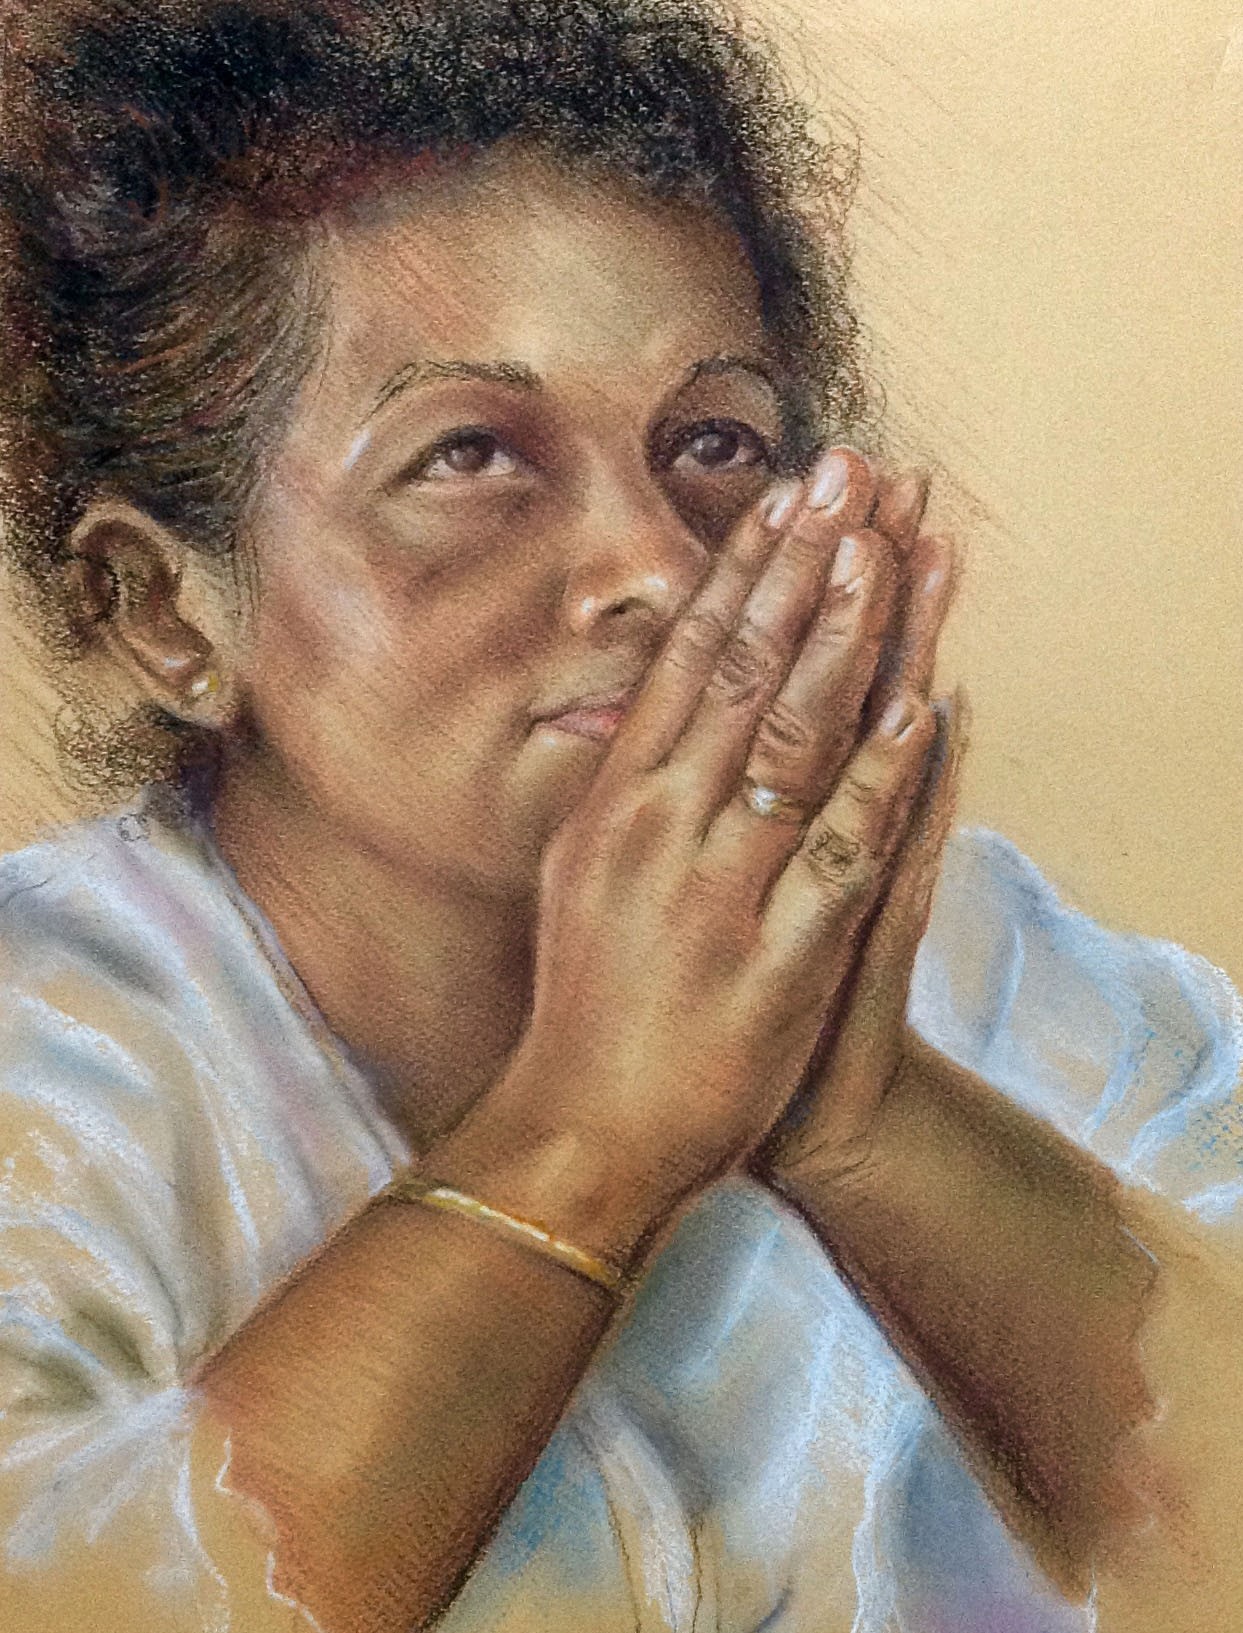 Praying hands by Dillai Joseph